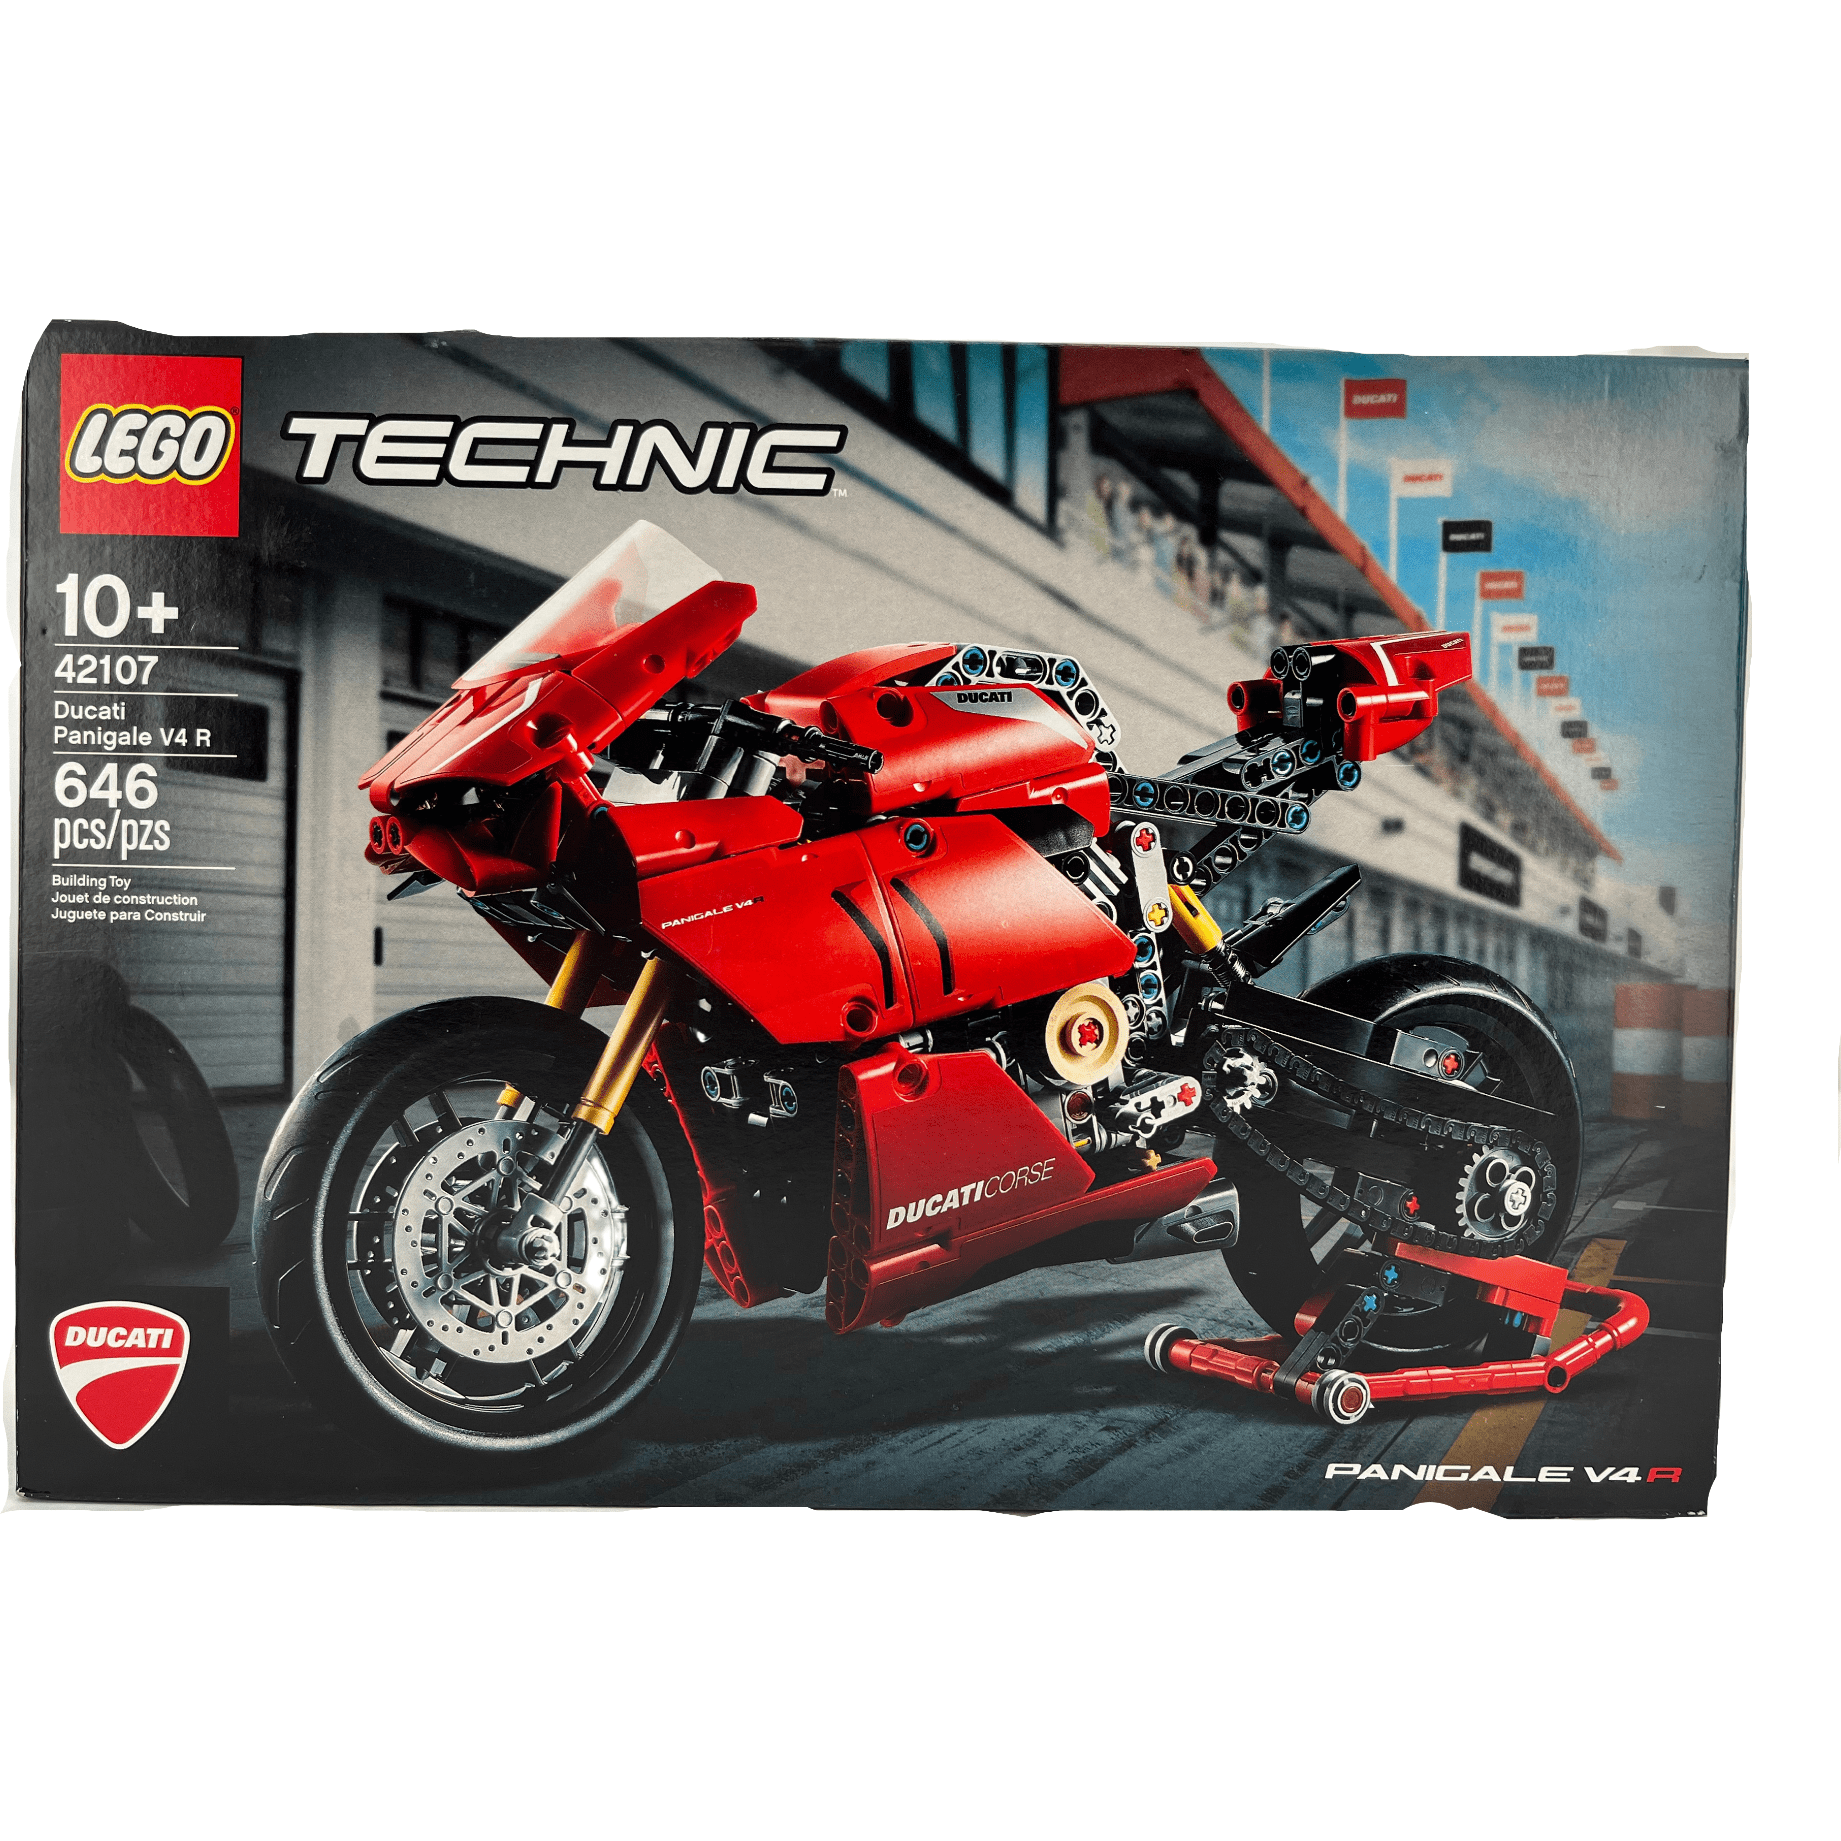 Lego Technic Ducati Panigale V4 R Building Set: 42107 / 646 pieces / 10+